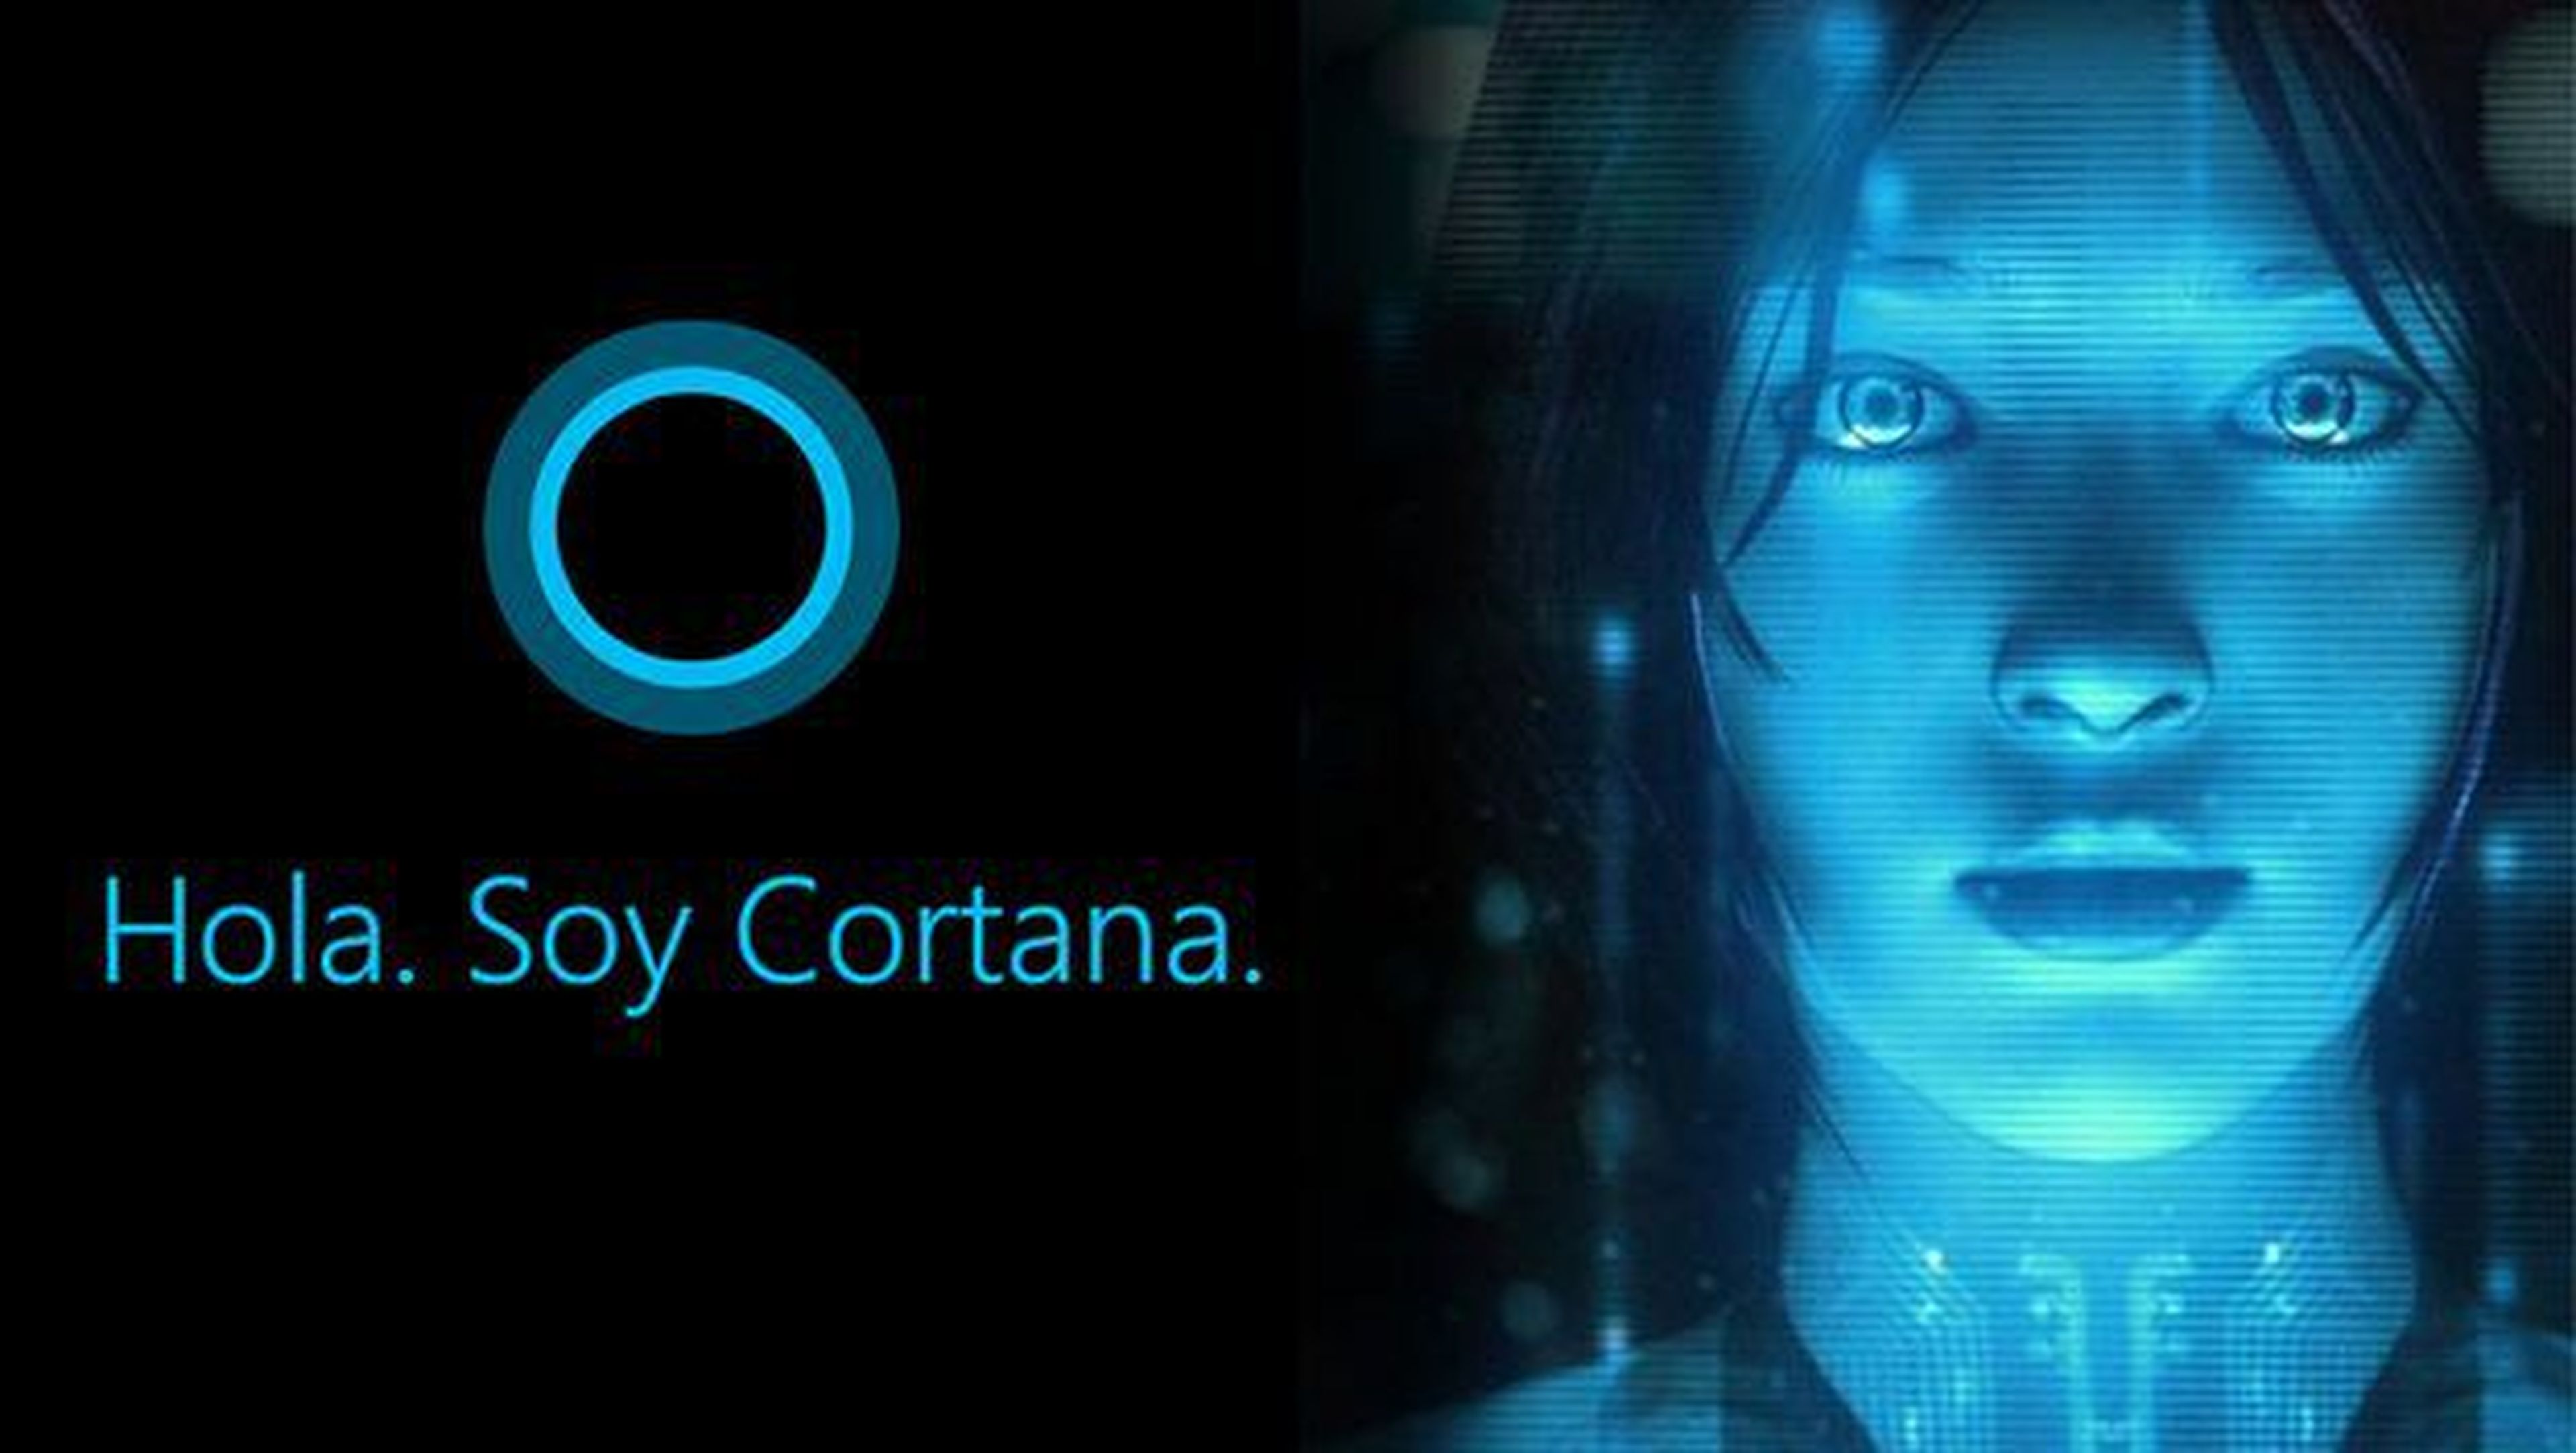 Windows 10 asistente personal Cortana